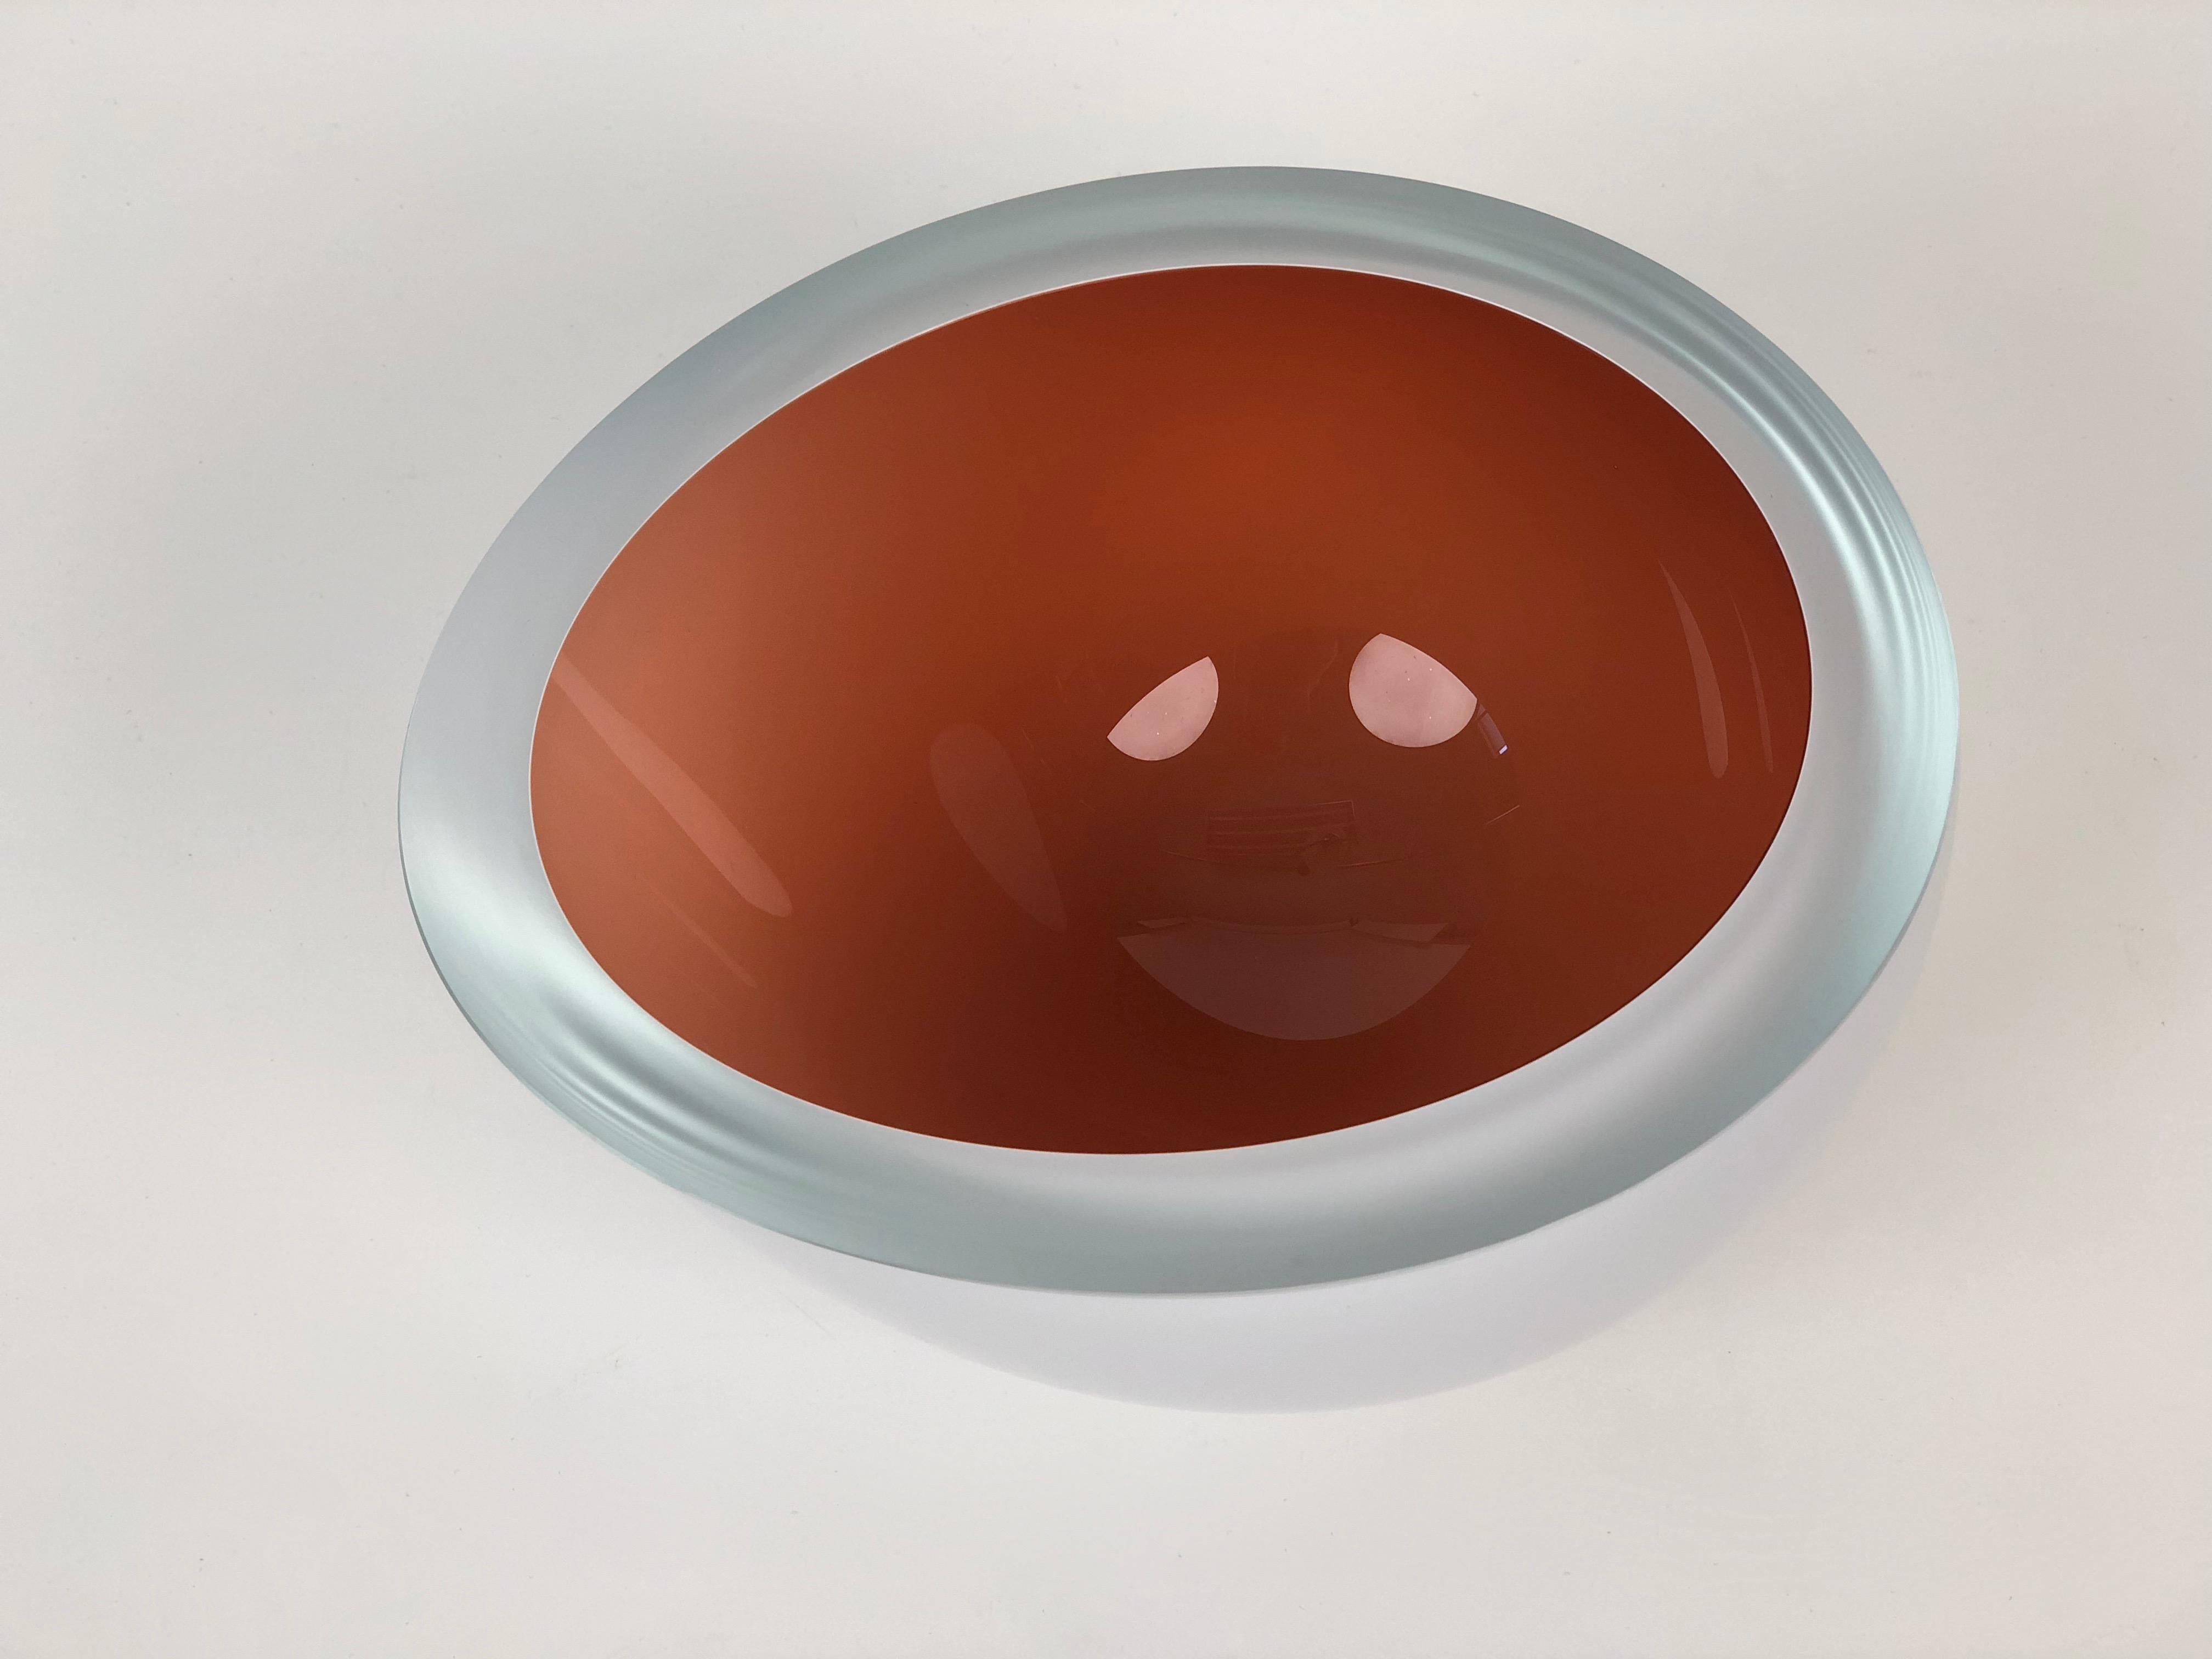 Contemporary Studio Glass Bowl in Coral Color, Made in the Czech Republic, 2010 In Good Condition For Sale In Vienna, Austria